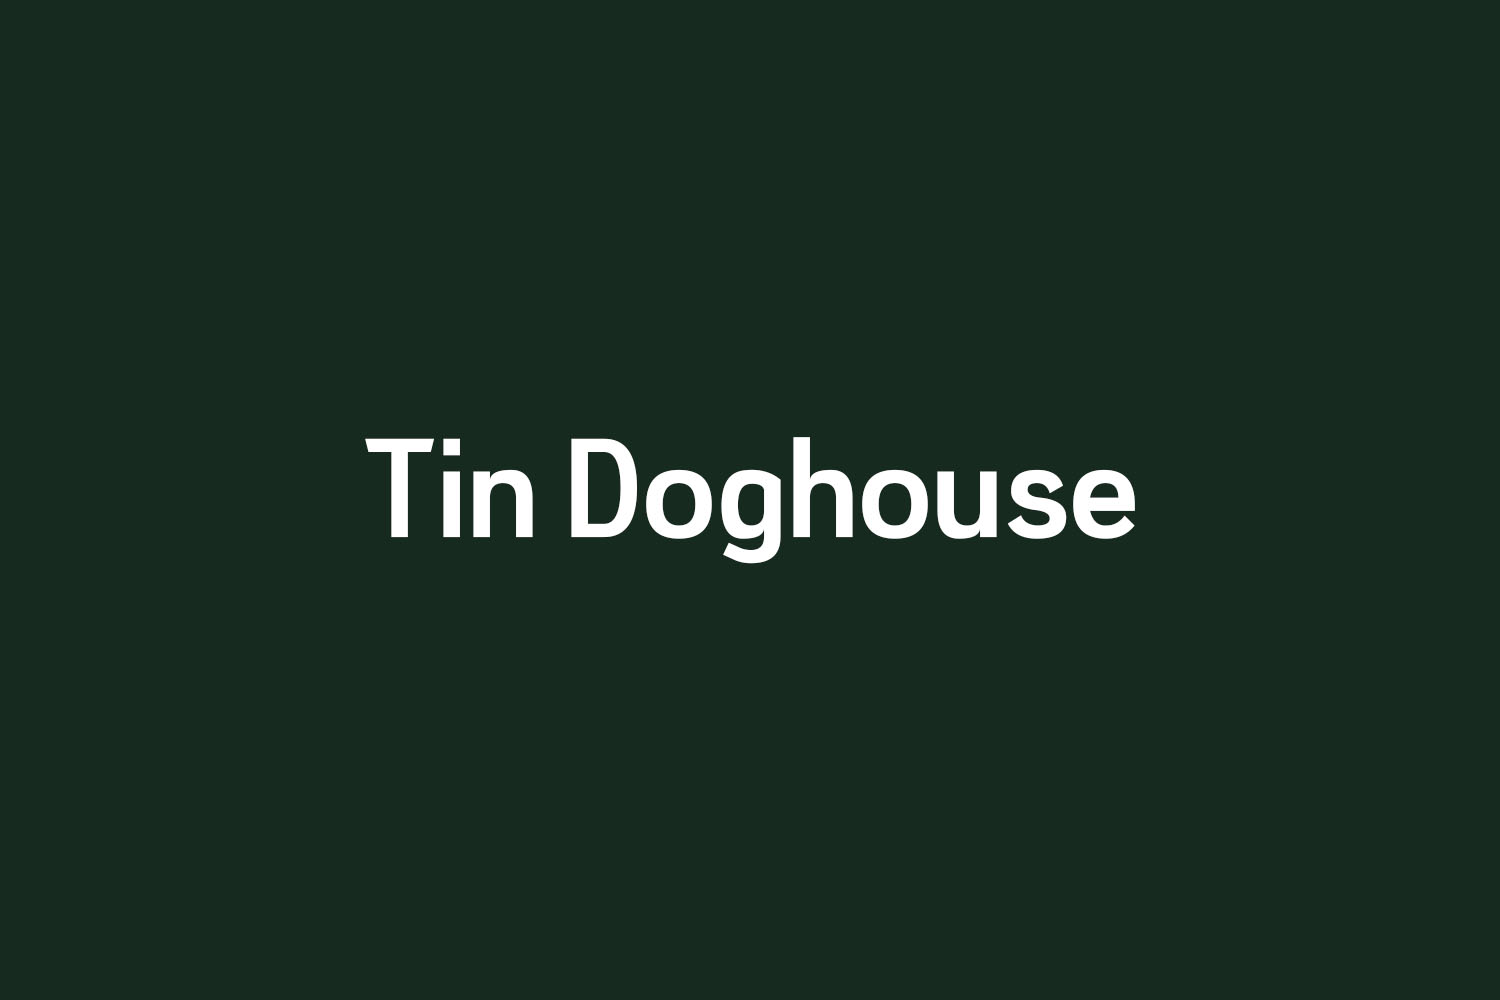 Tin Doghouse Free Font